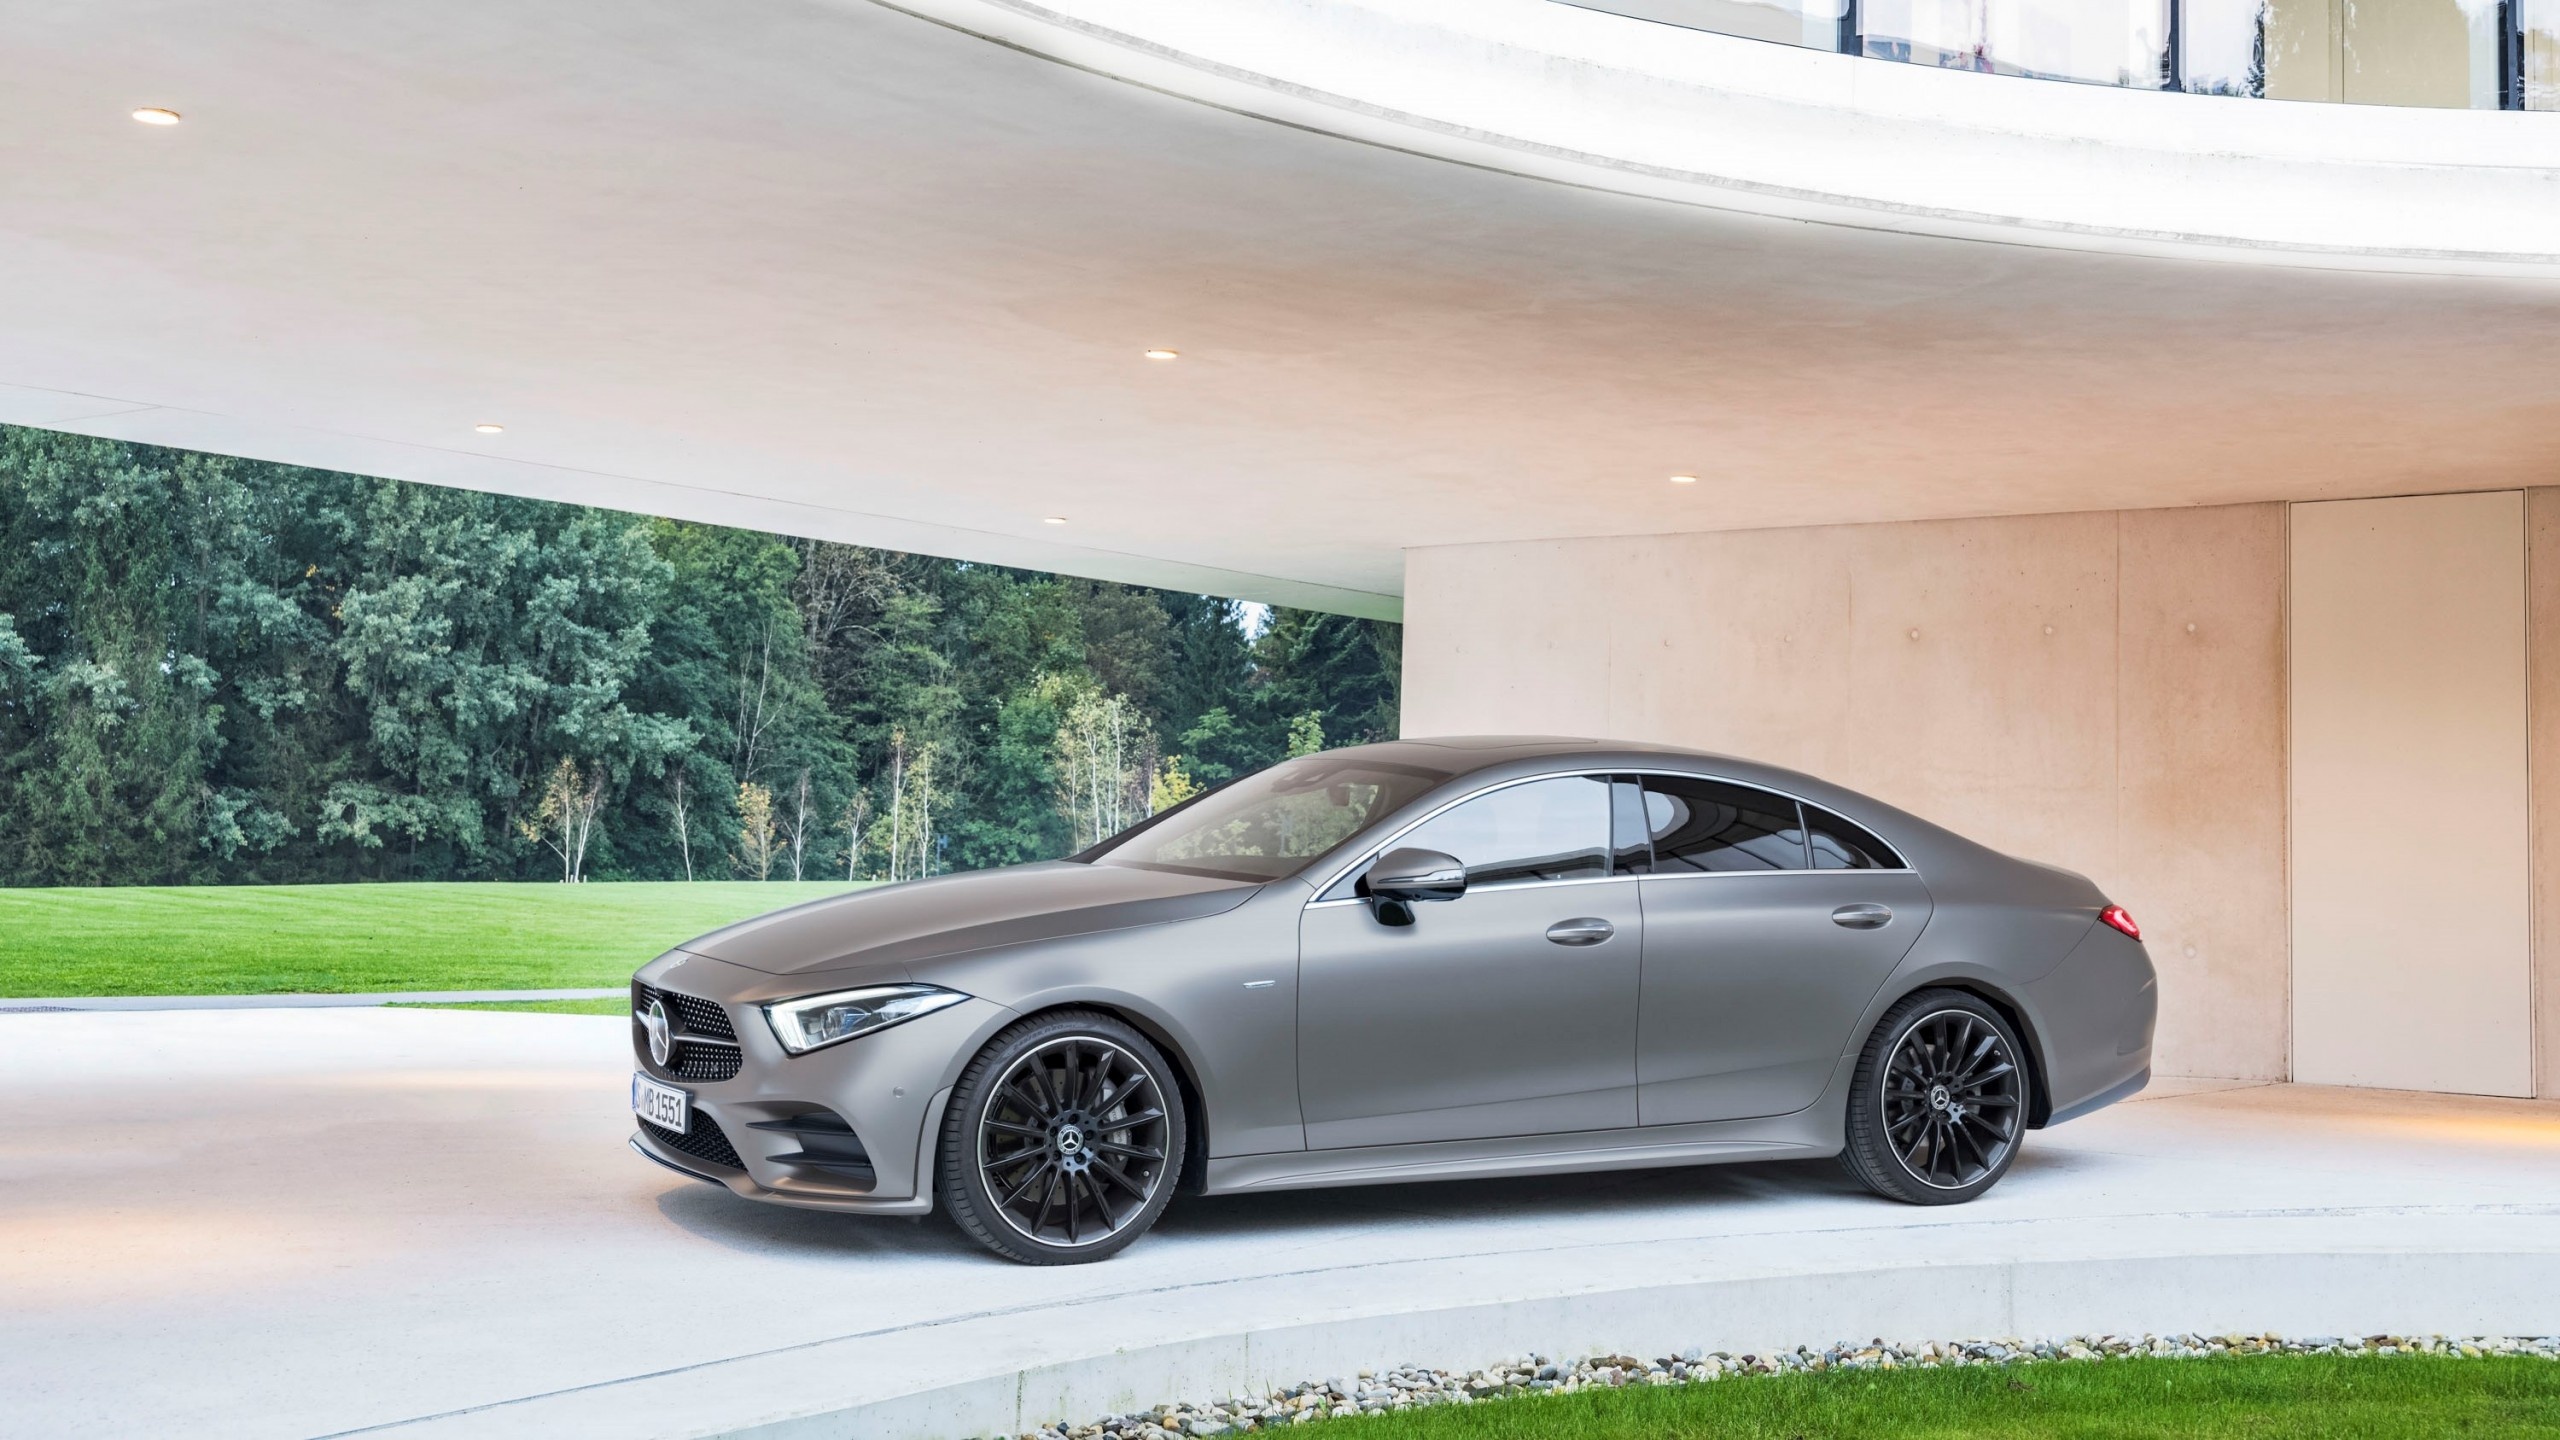 Mercedes-Benz CLS, 2019 car wallpaper, 4K resolution, Car and bike, 2560x1440 HD Desktop